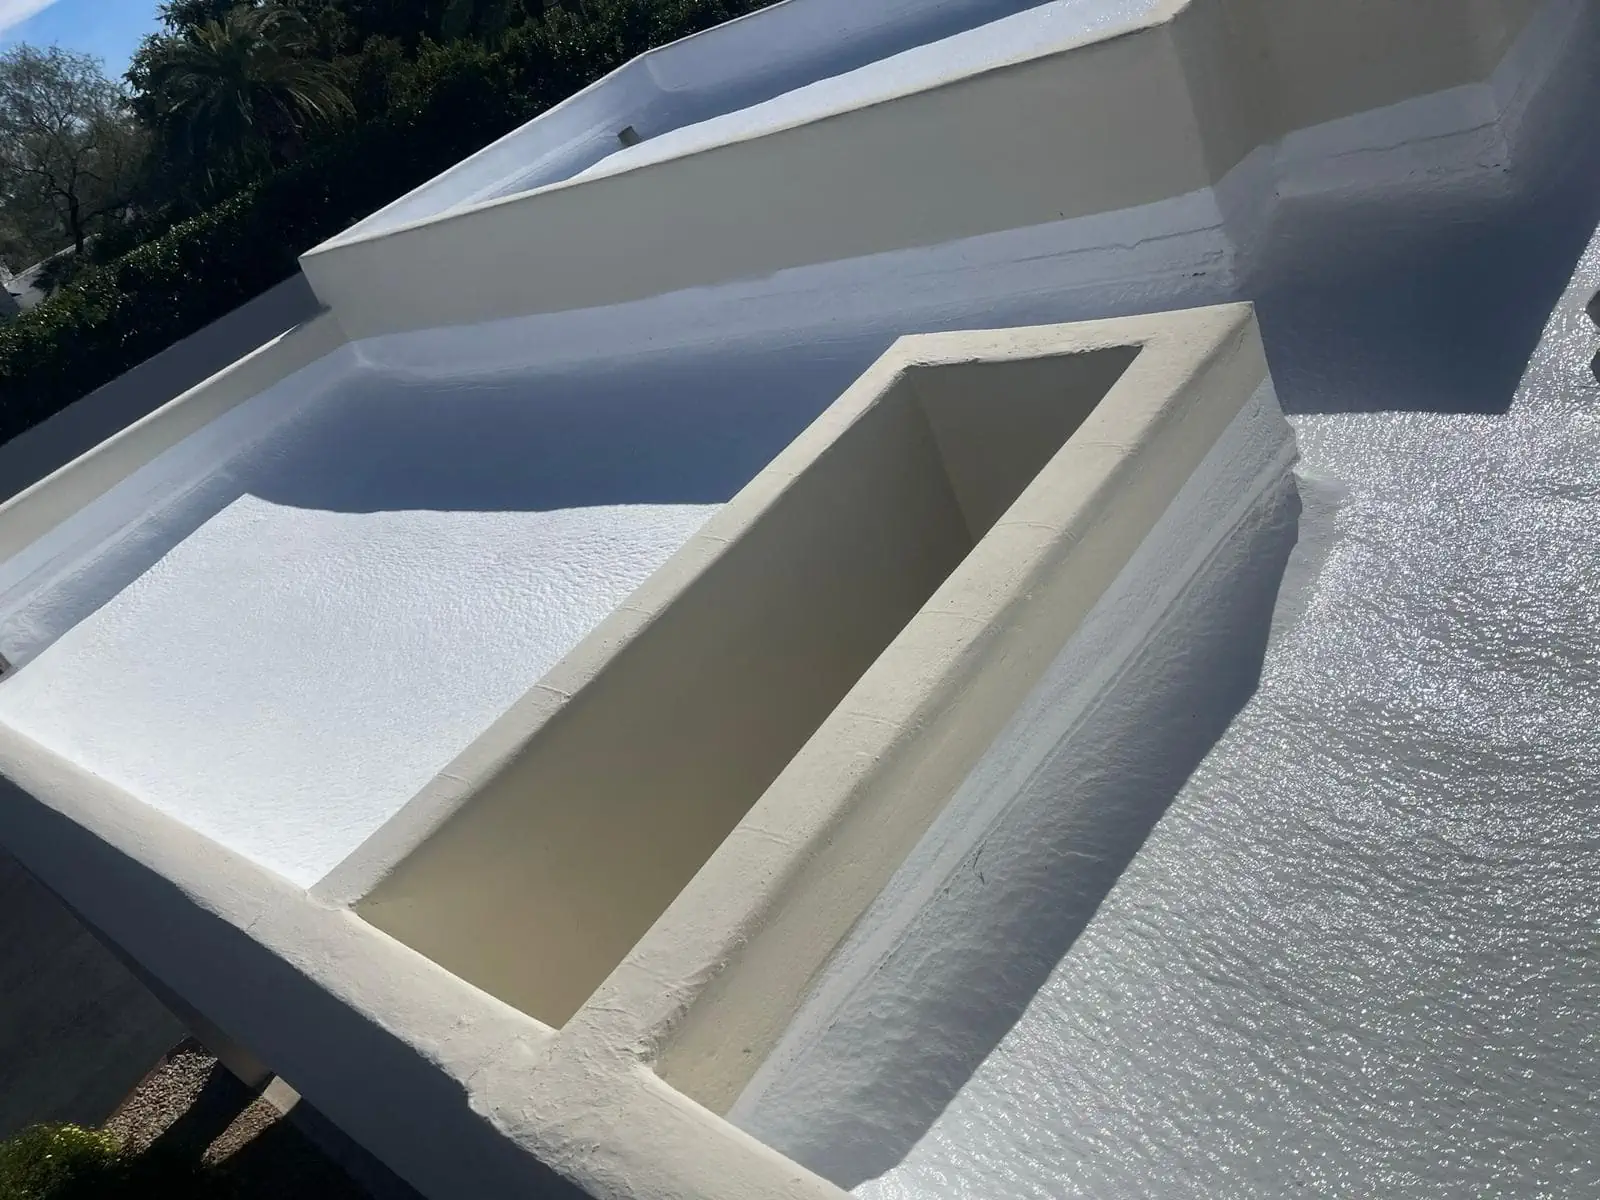 spray polyurethane roof coating in phoenix az